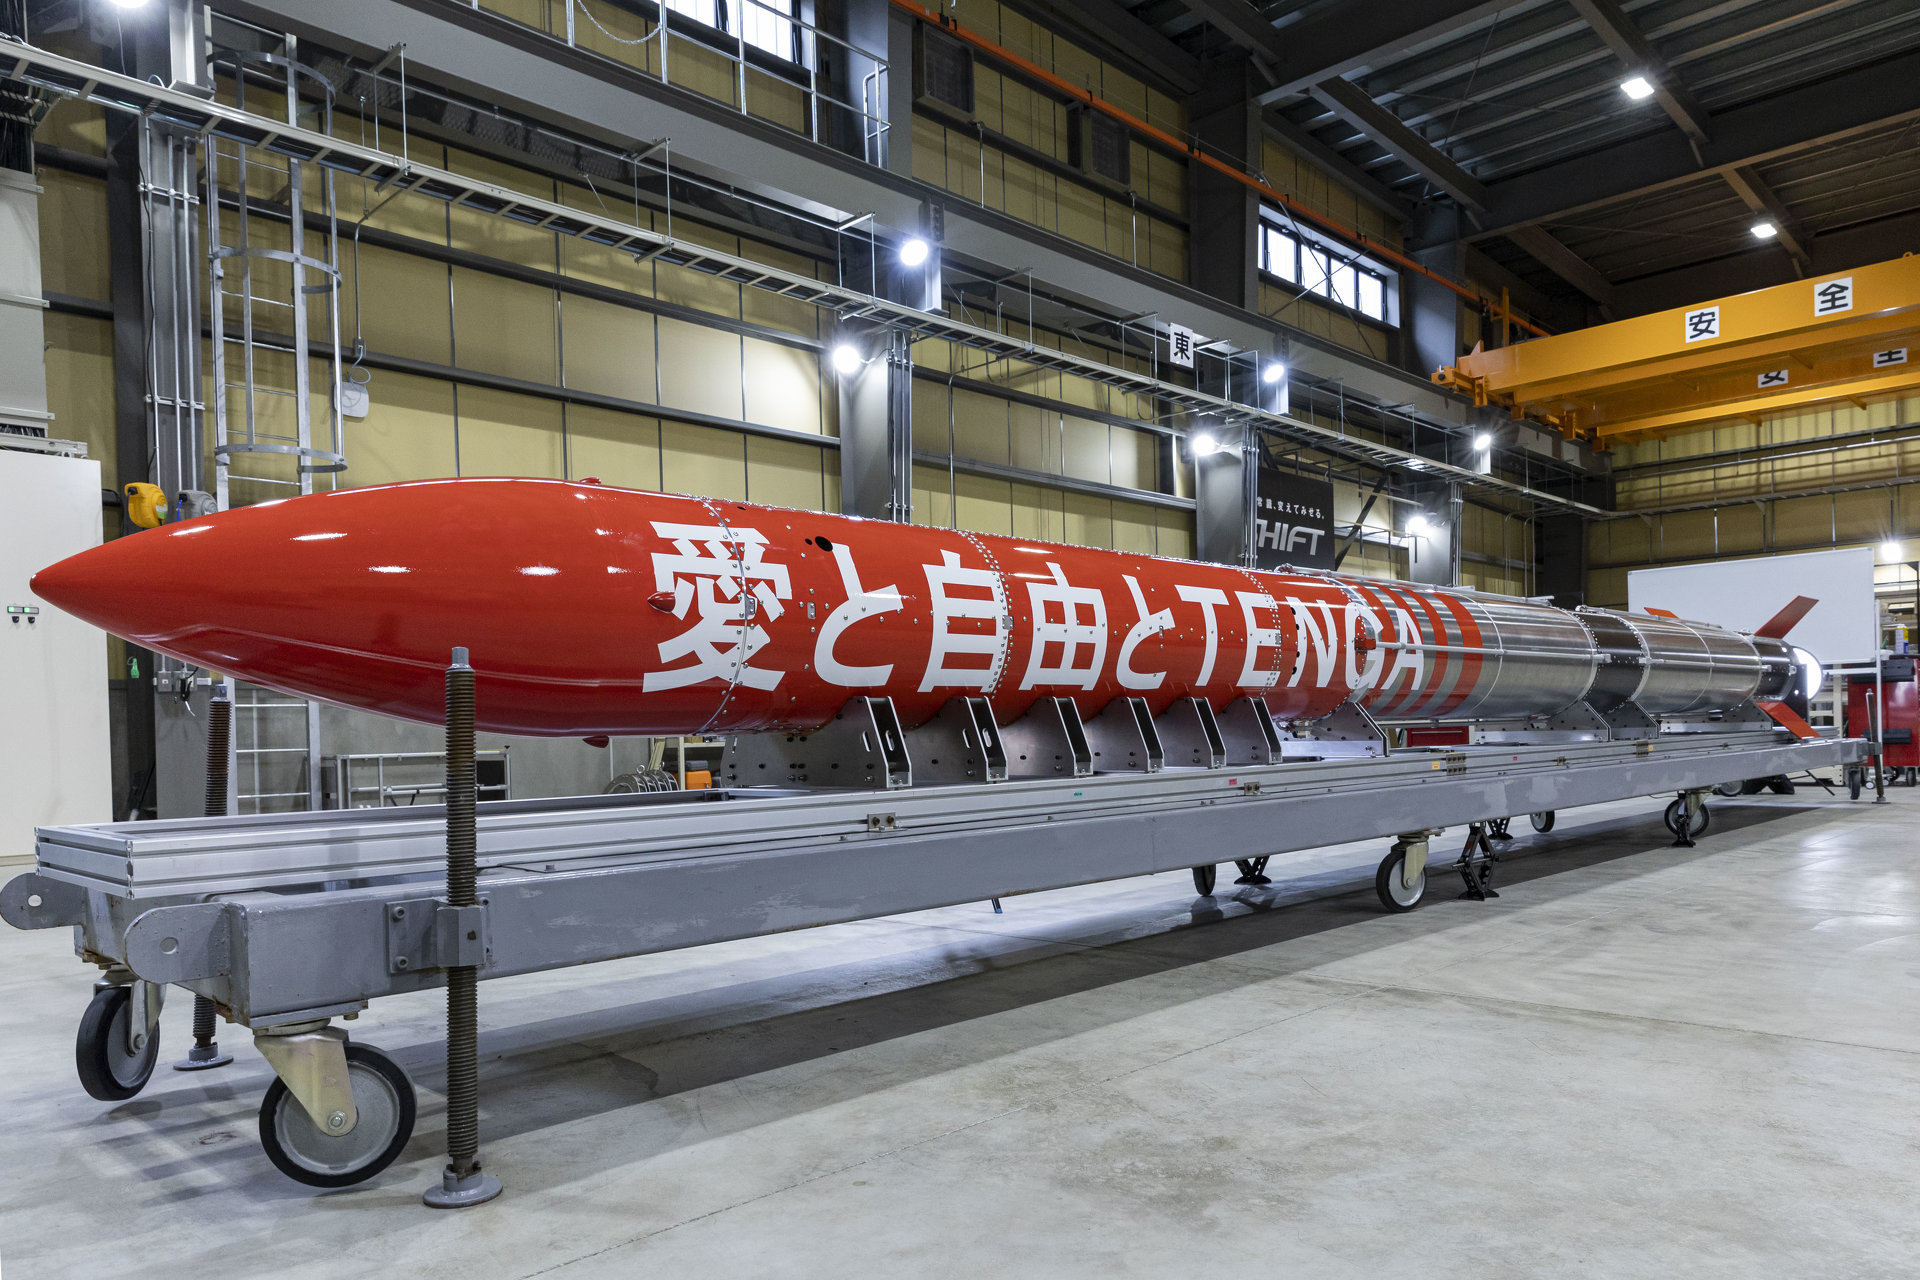 「TENGAロケット」真っ赤な機体が初公開　「宇宙用TENGA」開発のデータ収集に活用　ホリエモンも協力